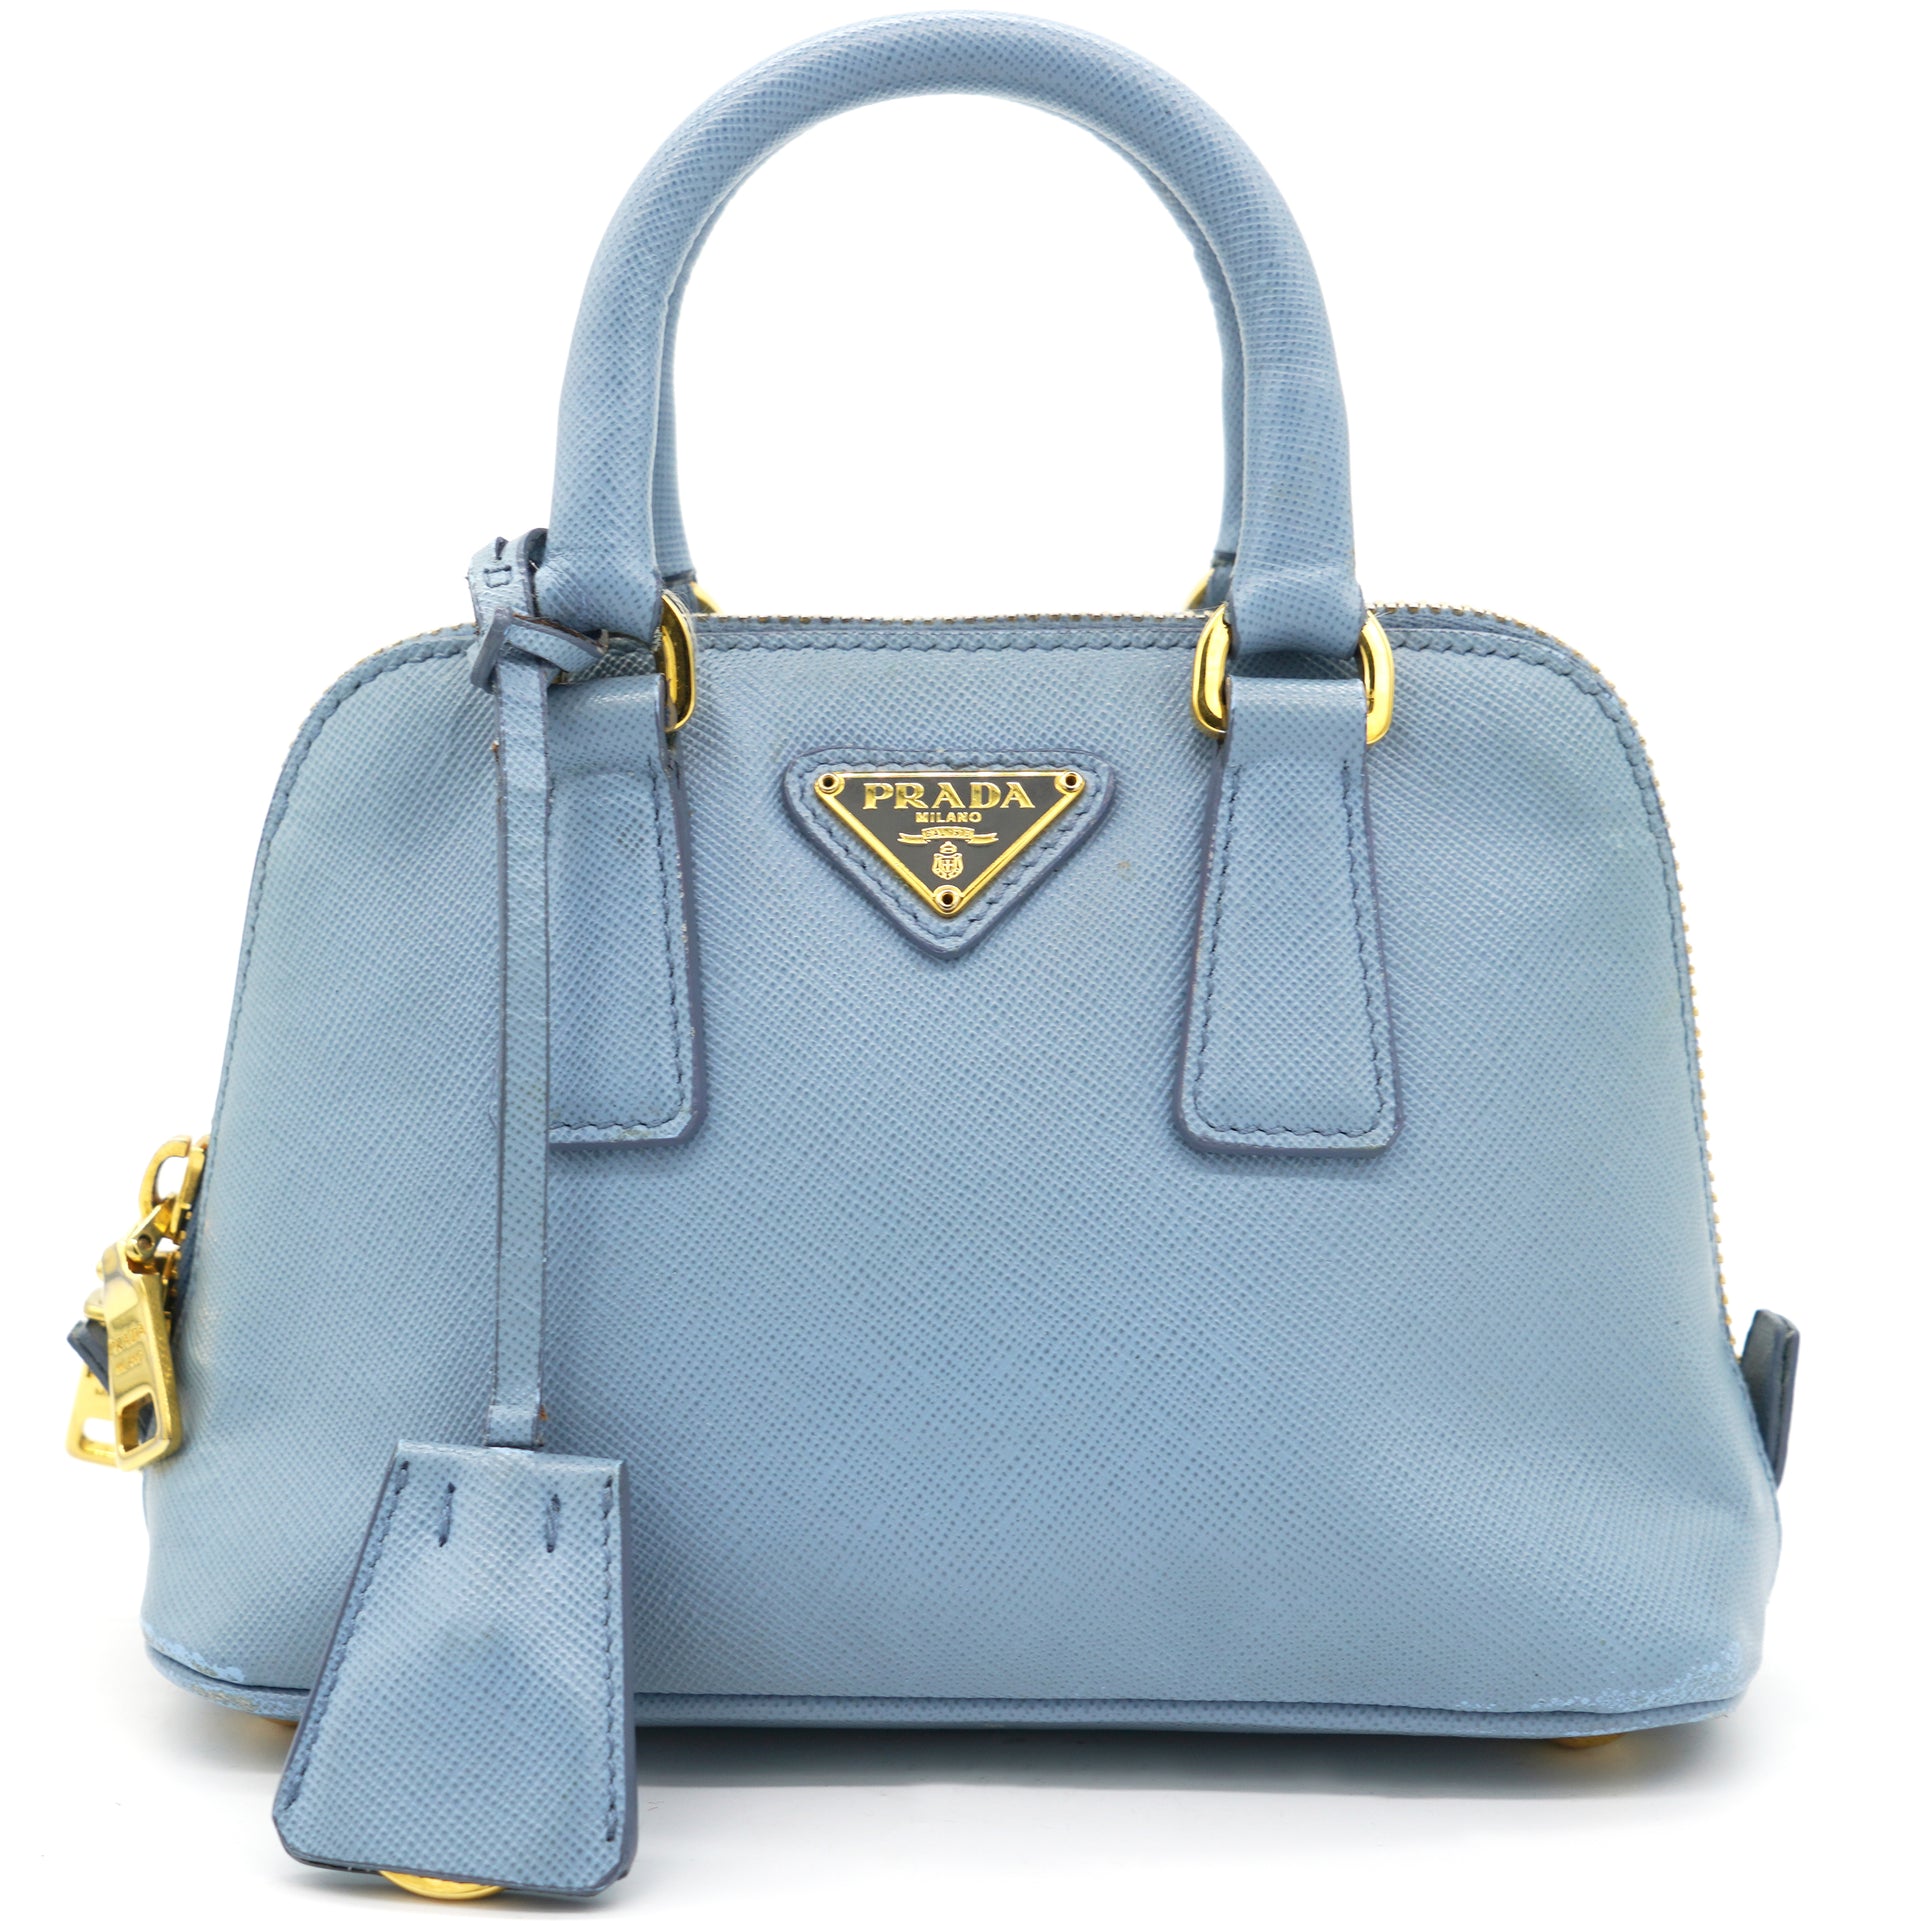 Prada Pink Handbags | ShopStyle